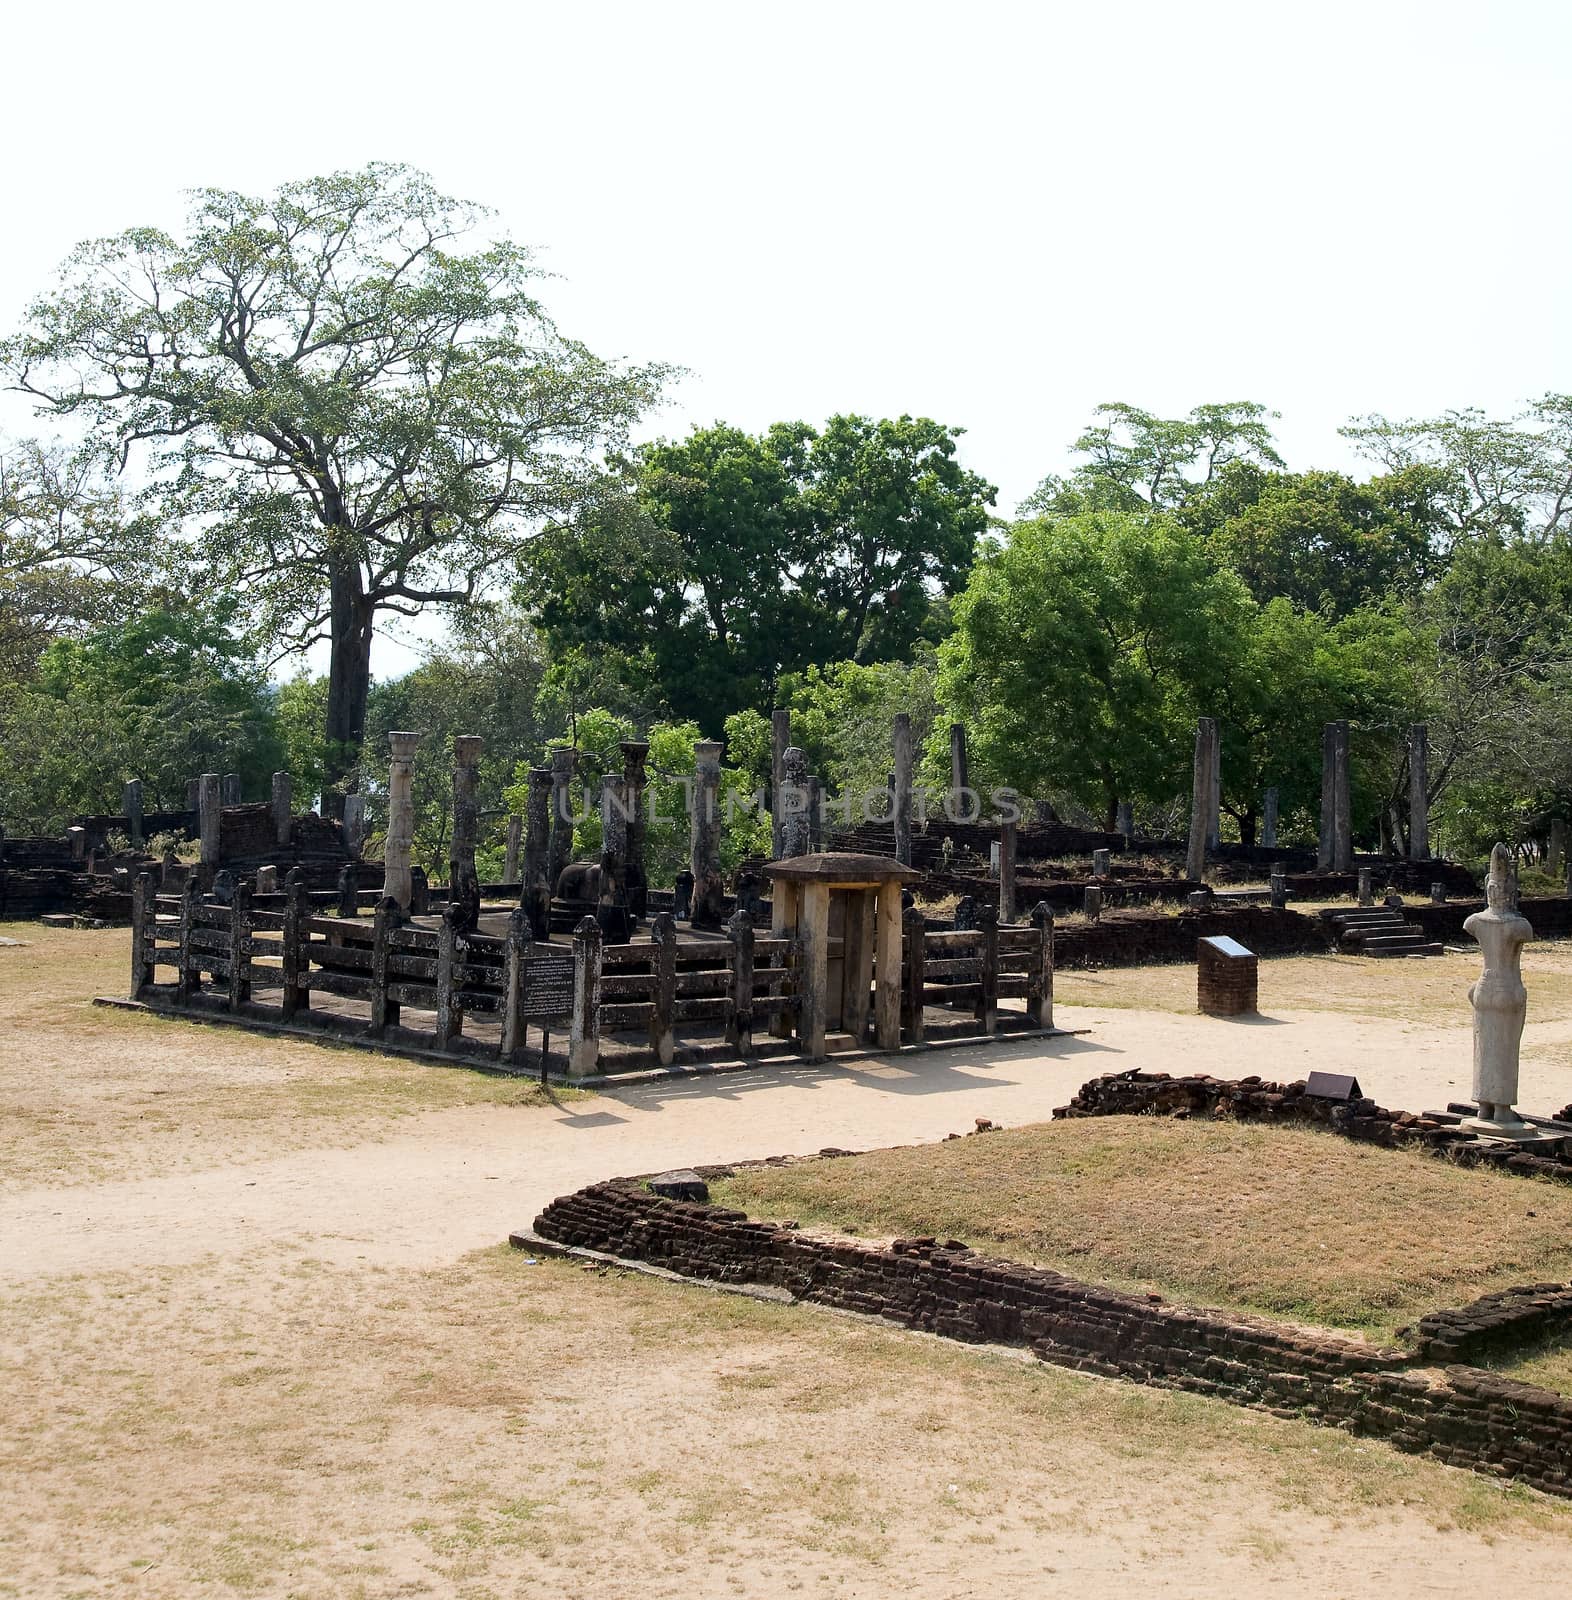 latha mandapaya - lotus anctuary  - ancient capital of Ceylon  in Polonnaruwa, Sri Lanka 